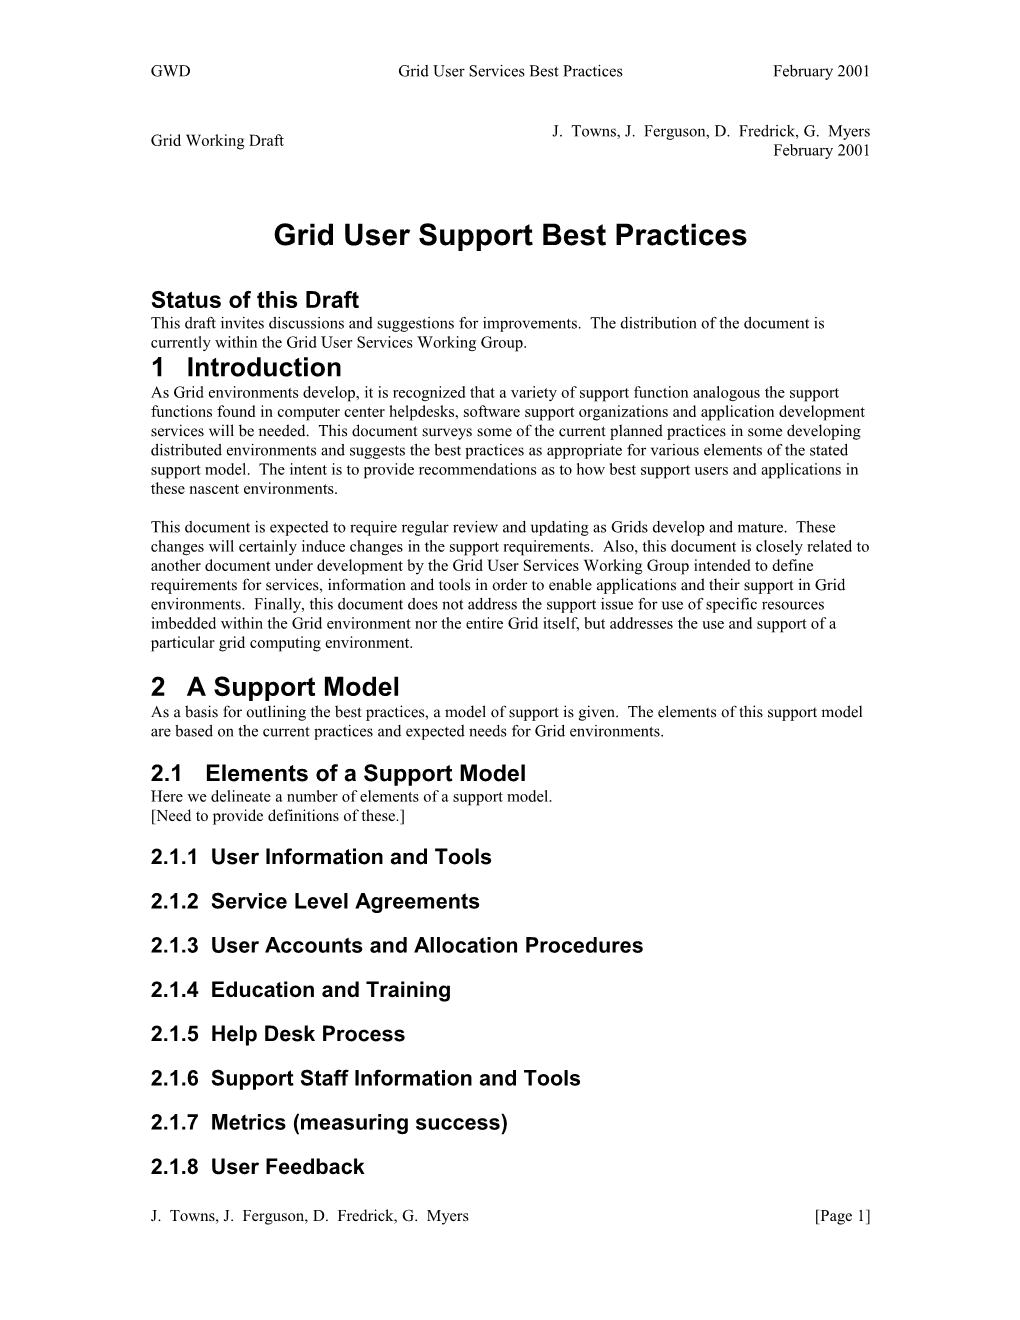 Support Model Best Practices